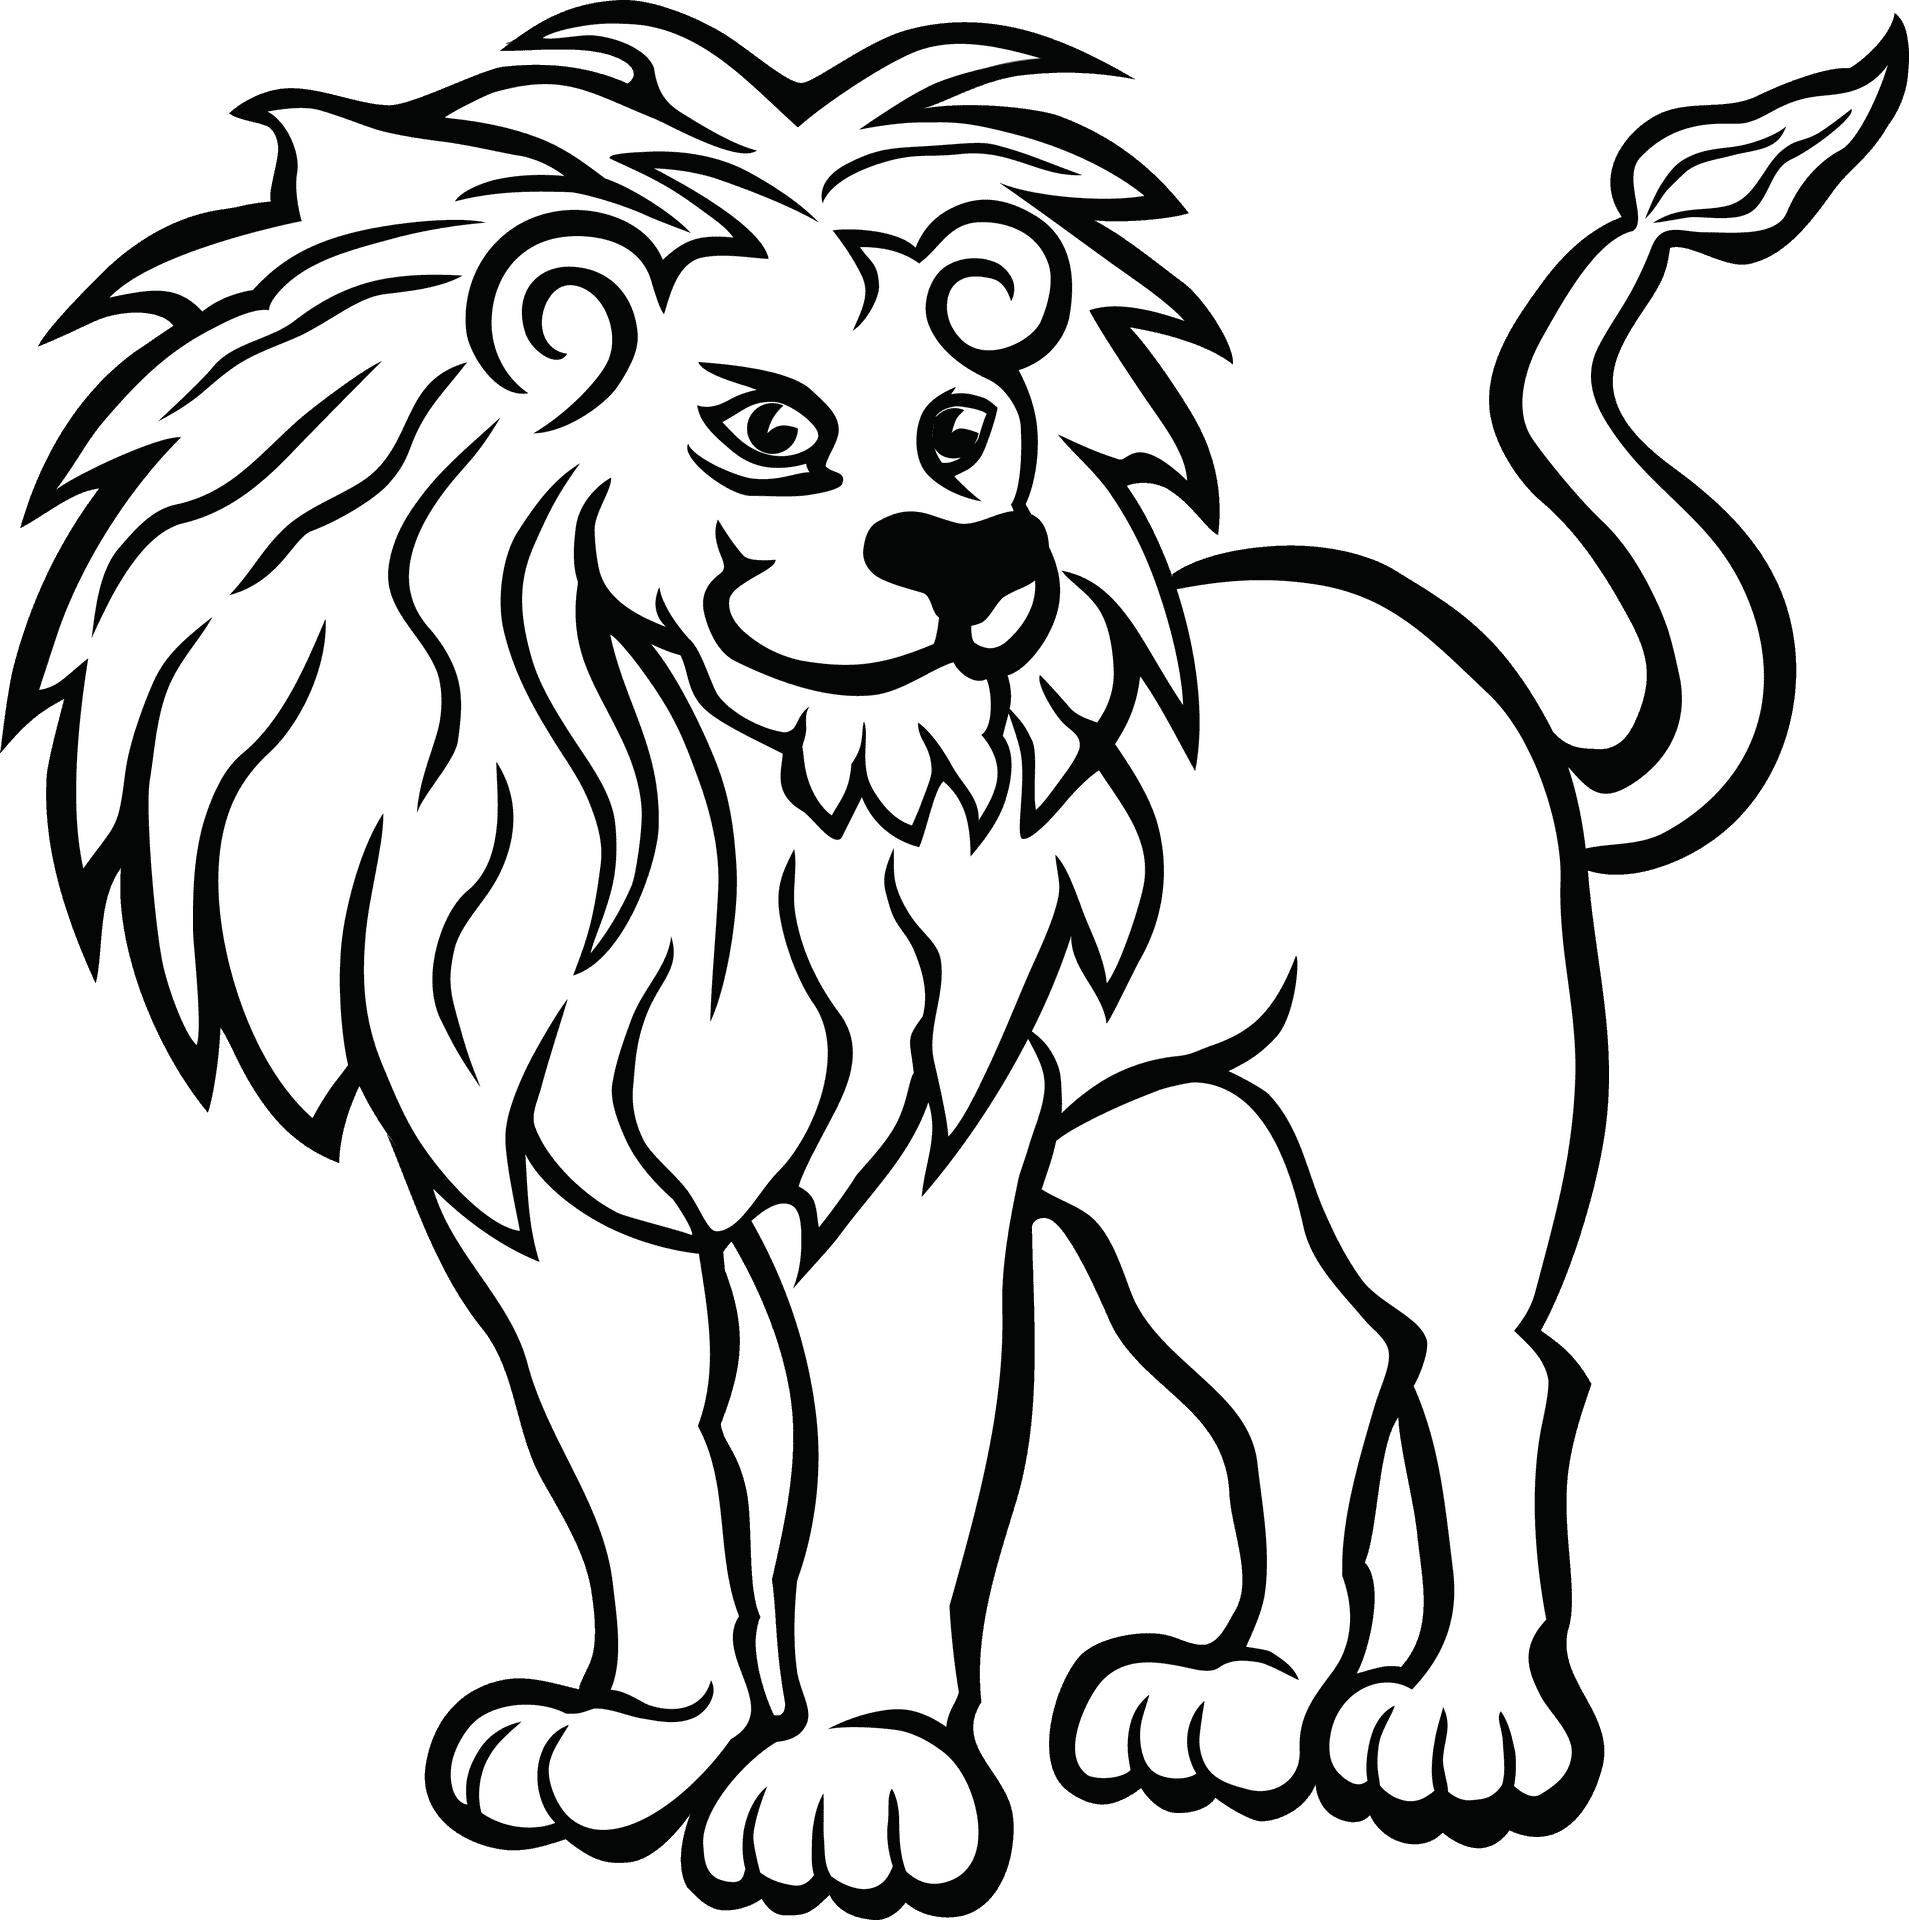 Stylized Black Lion Illustration PNG